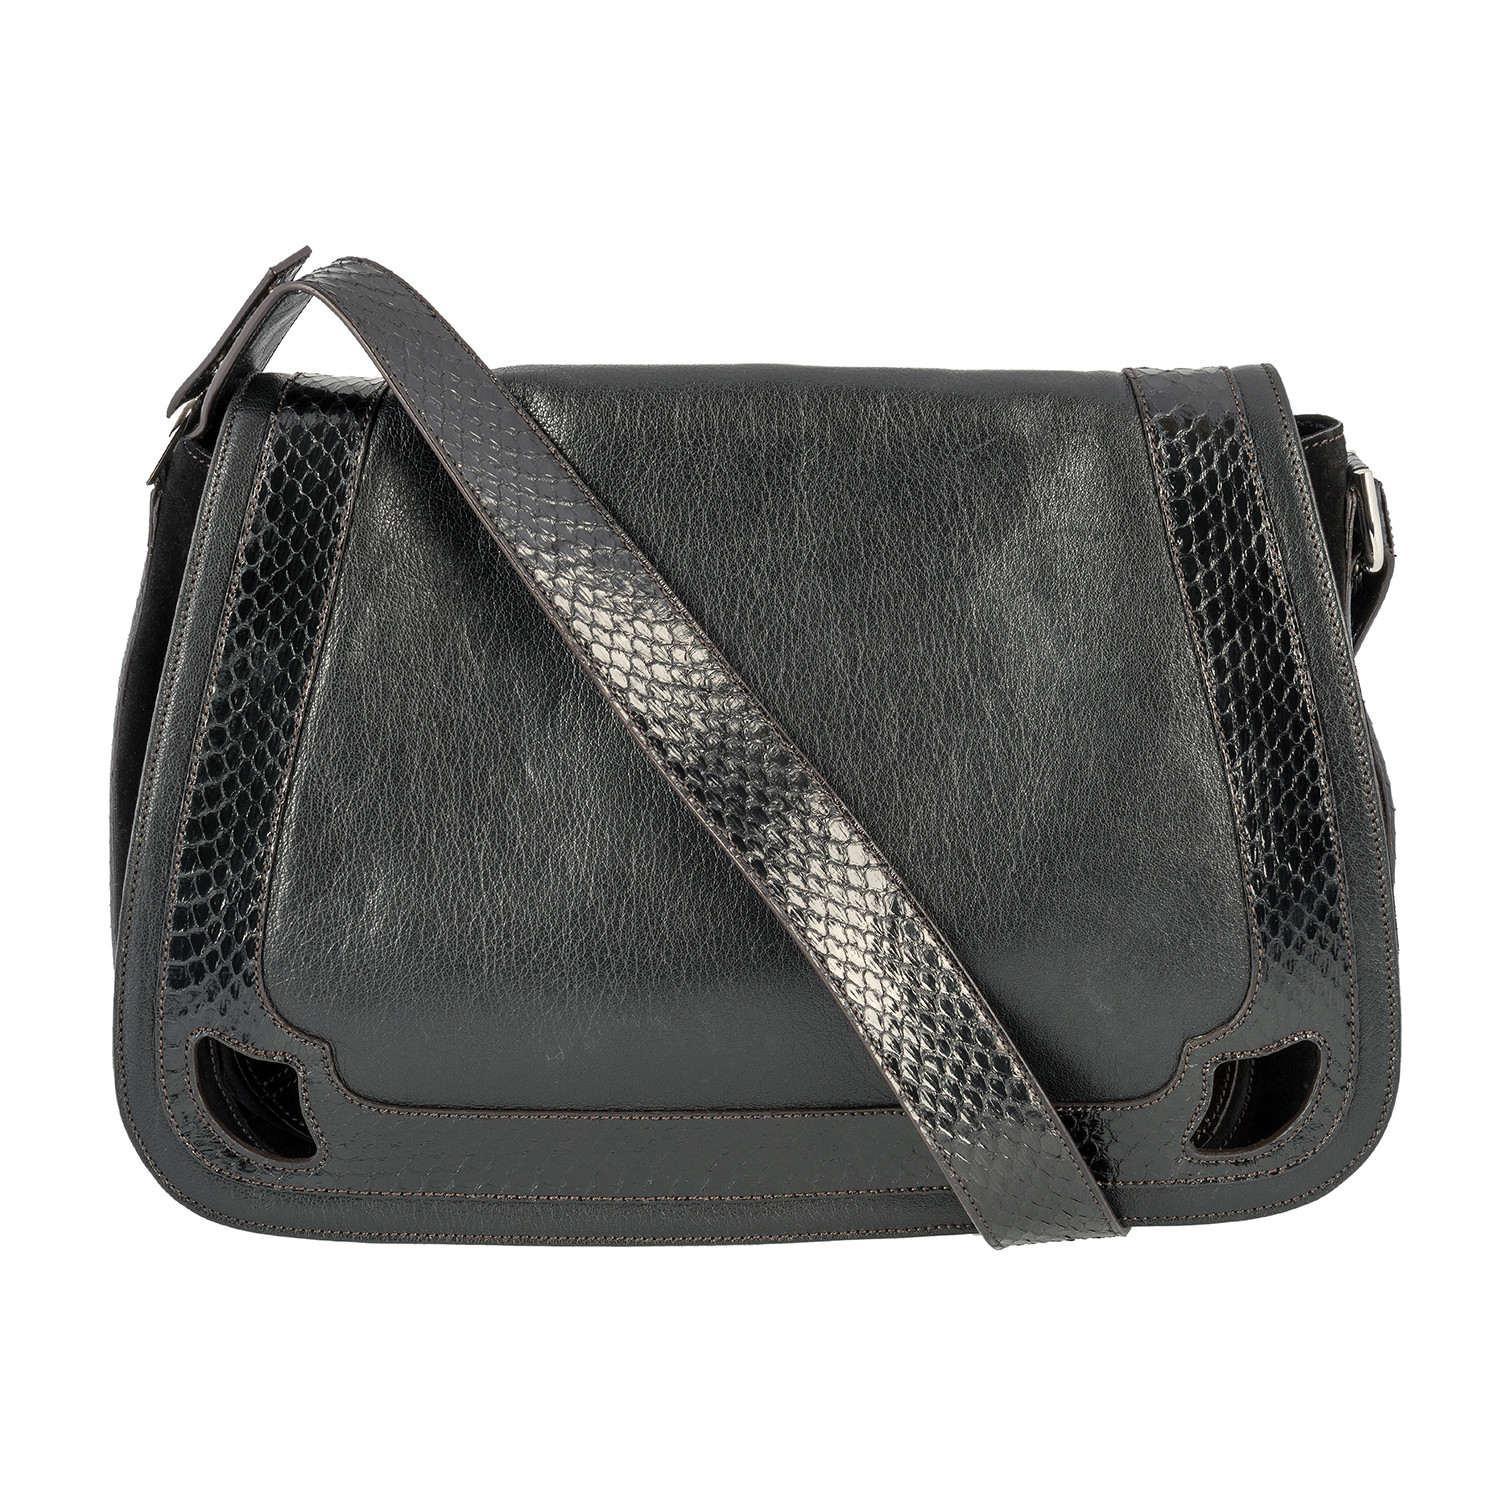 Cartier // Black De Dama Leather Handbag // Pre-Owned - Pre-Owned Designer Bags & Accessories ...